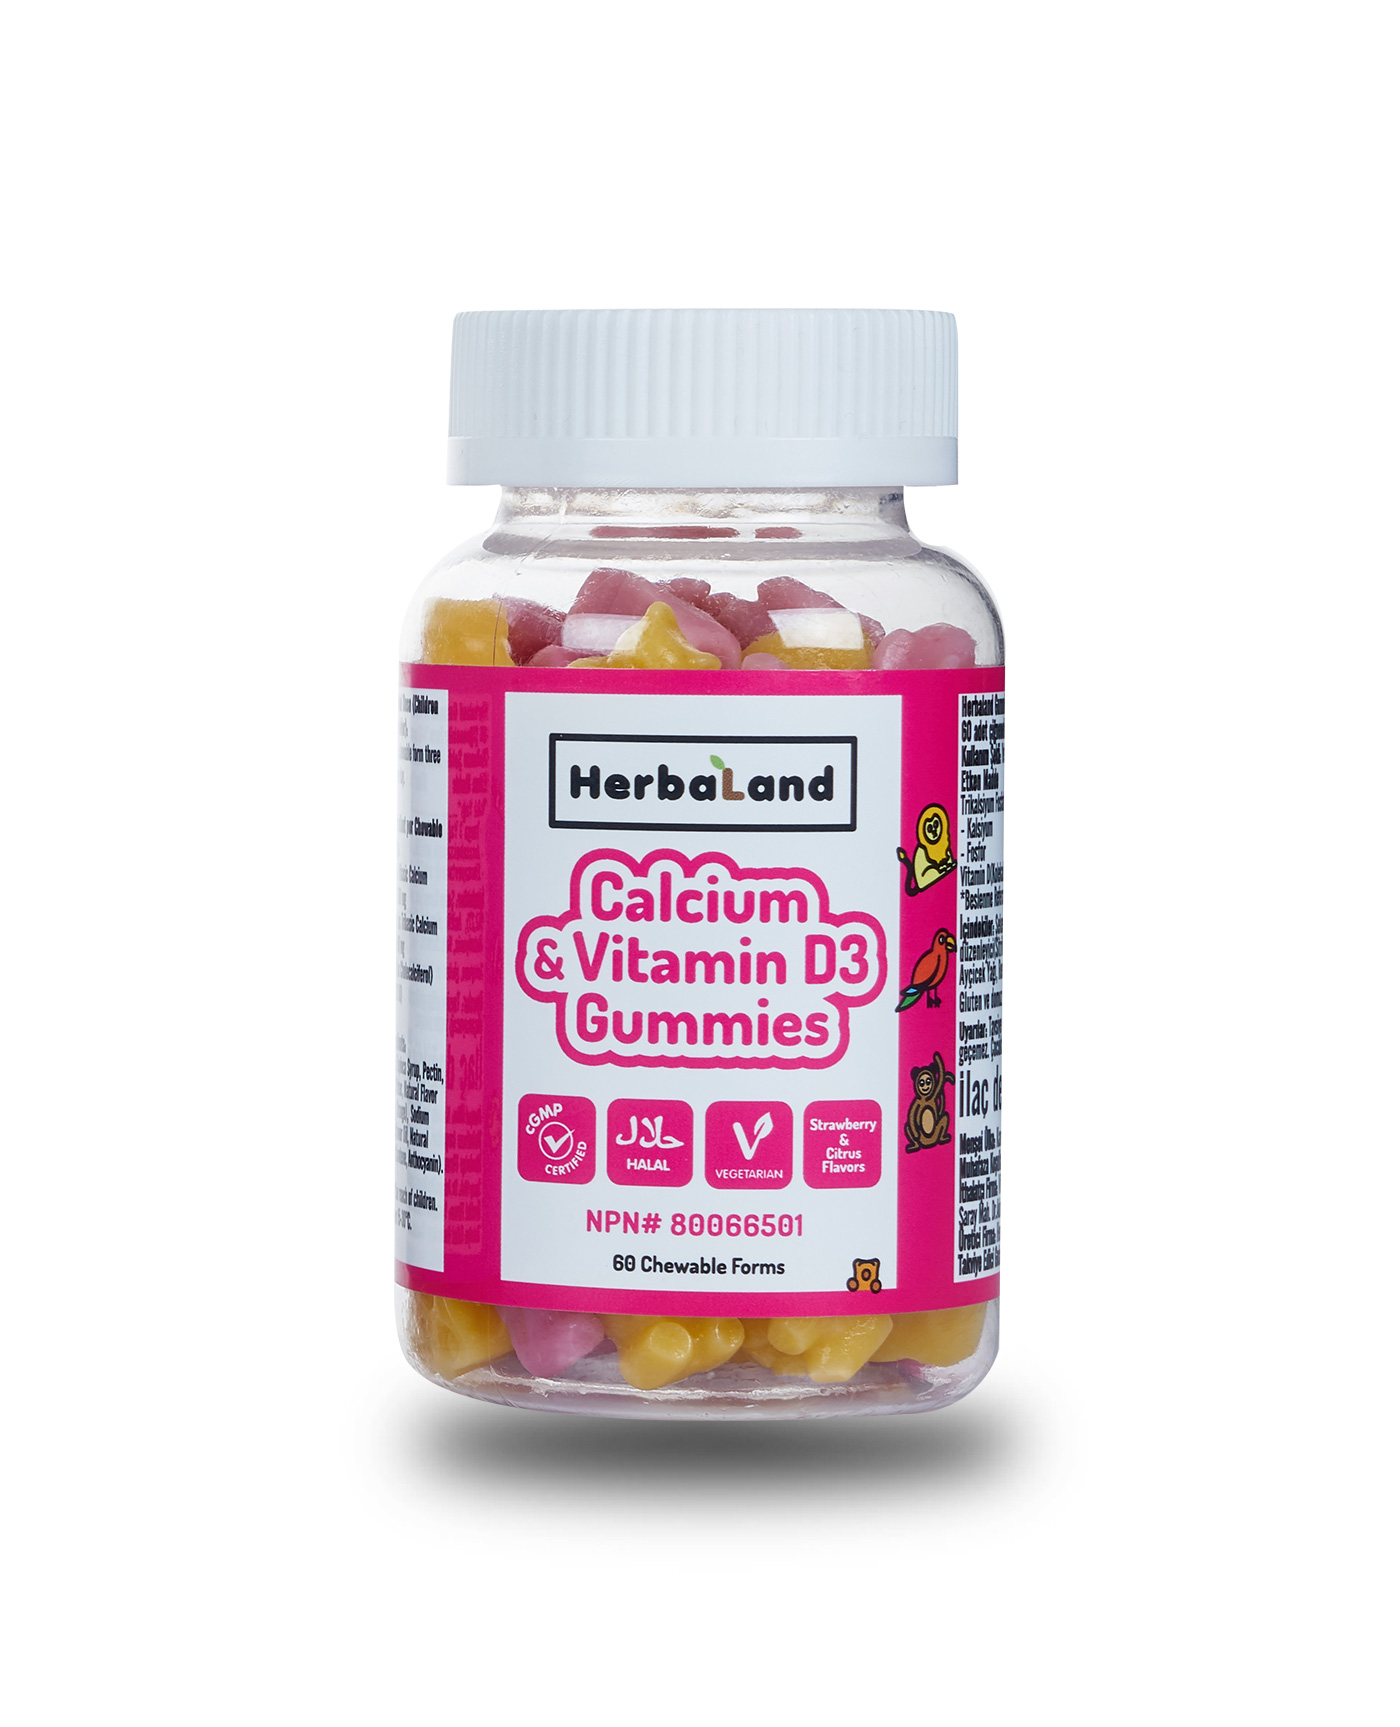 G g vitamins. Витамины Gummies d3 HERBALAND. HERBALAND Calcium Vitamin d3 Gummies. HERBALAND Omega. Кальций витамины.